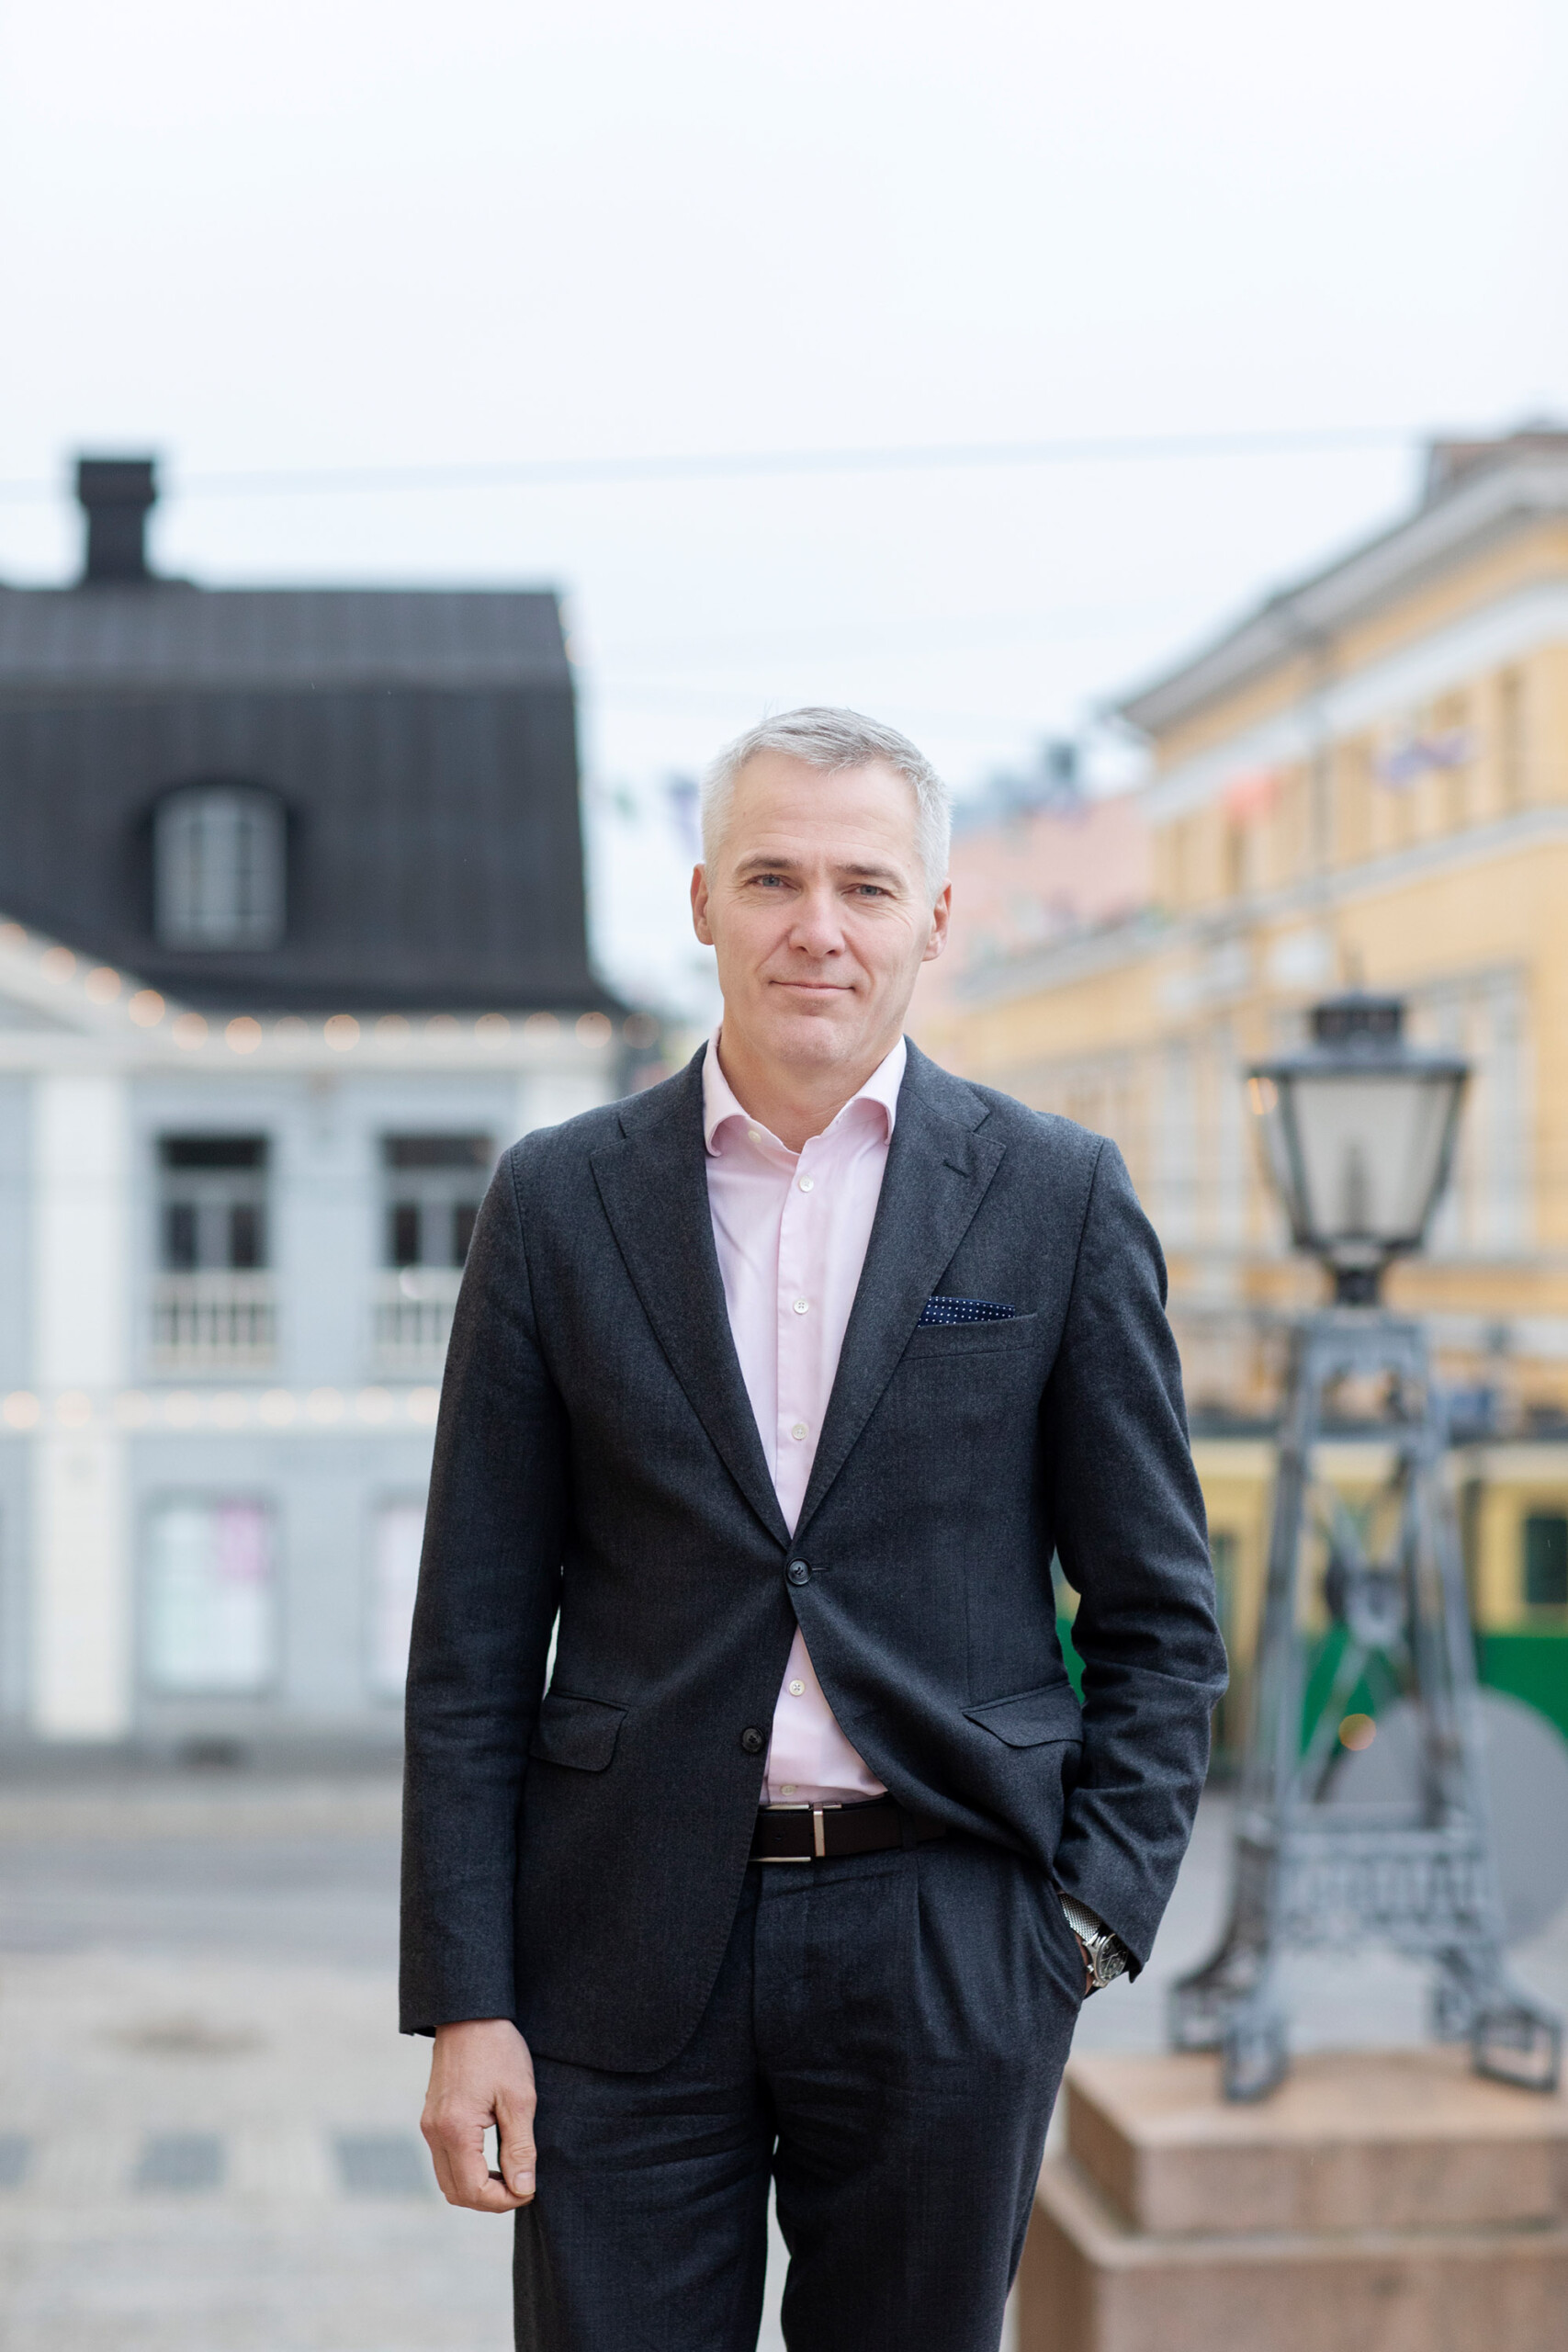 Eurooppa- ja omistajaohjausministeri Anders Adlercreutz kuvattuna senaatintorilla Helsingissä